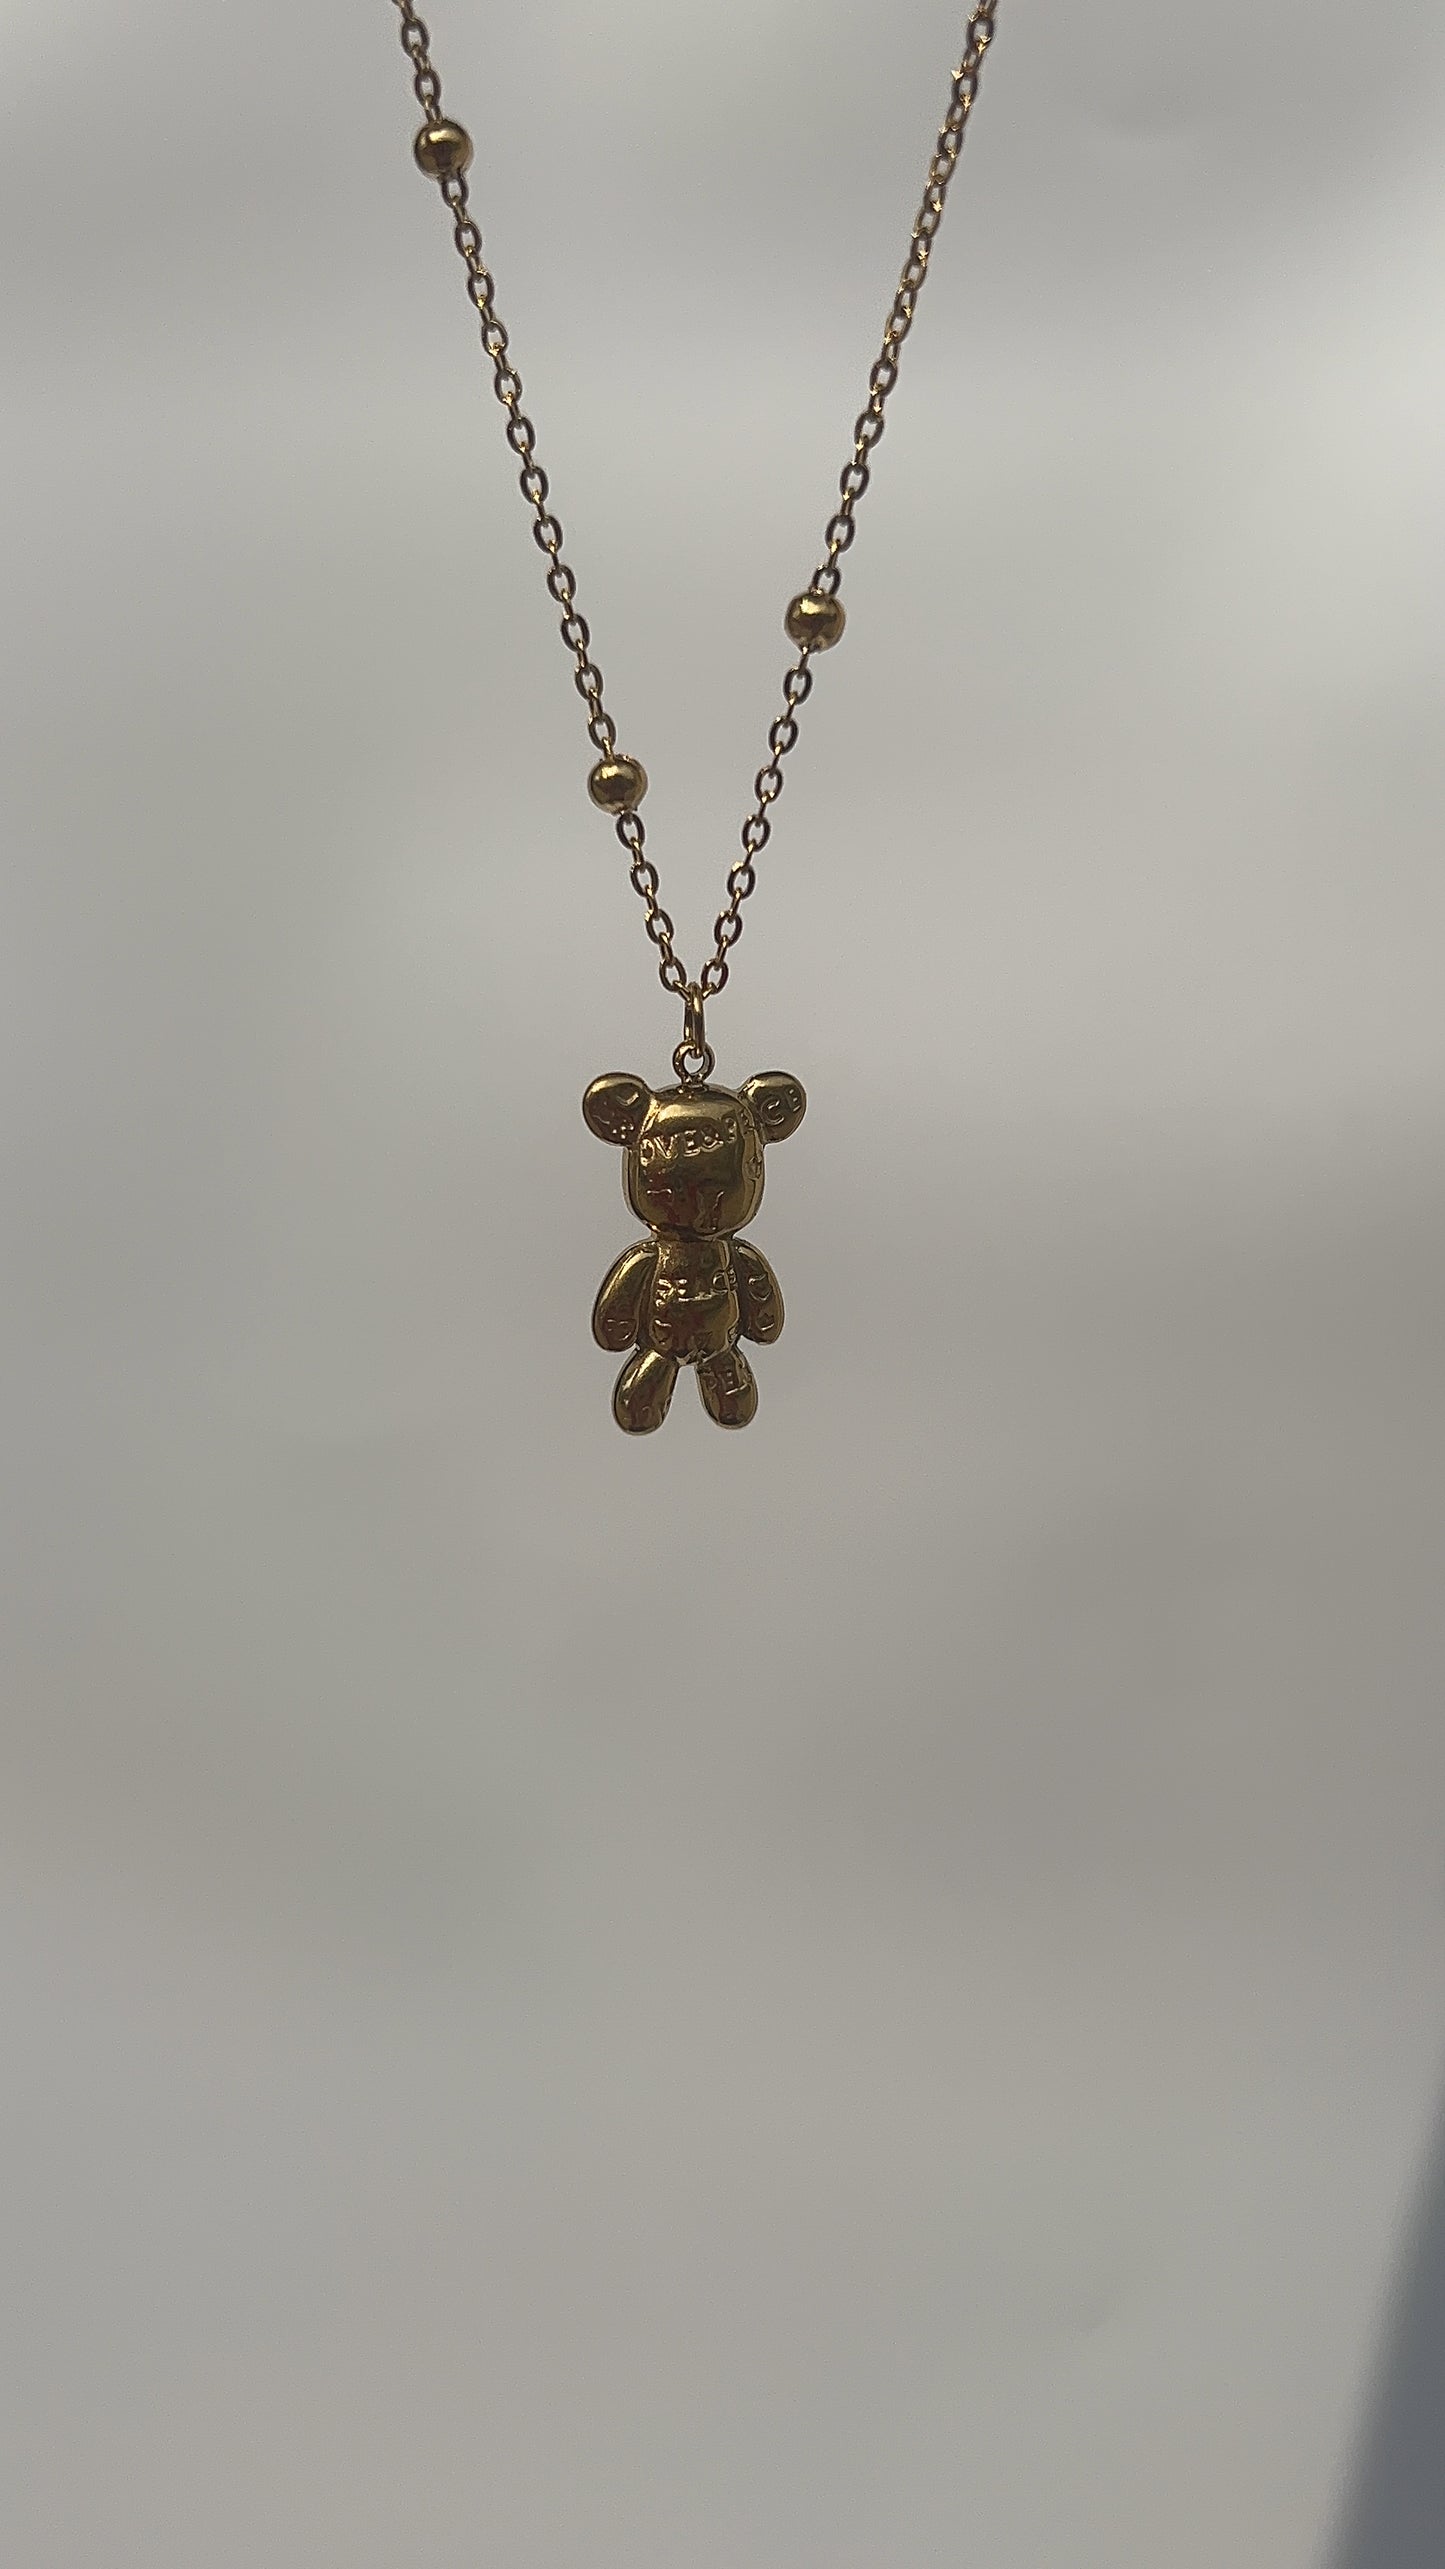 Teddy necklace